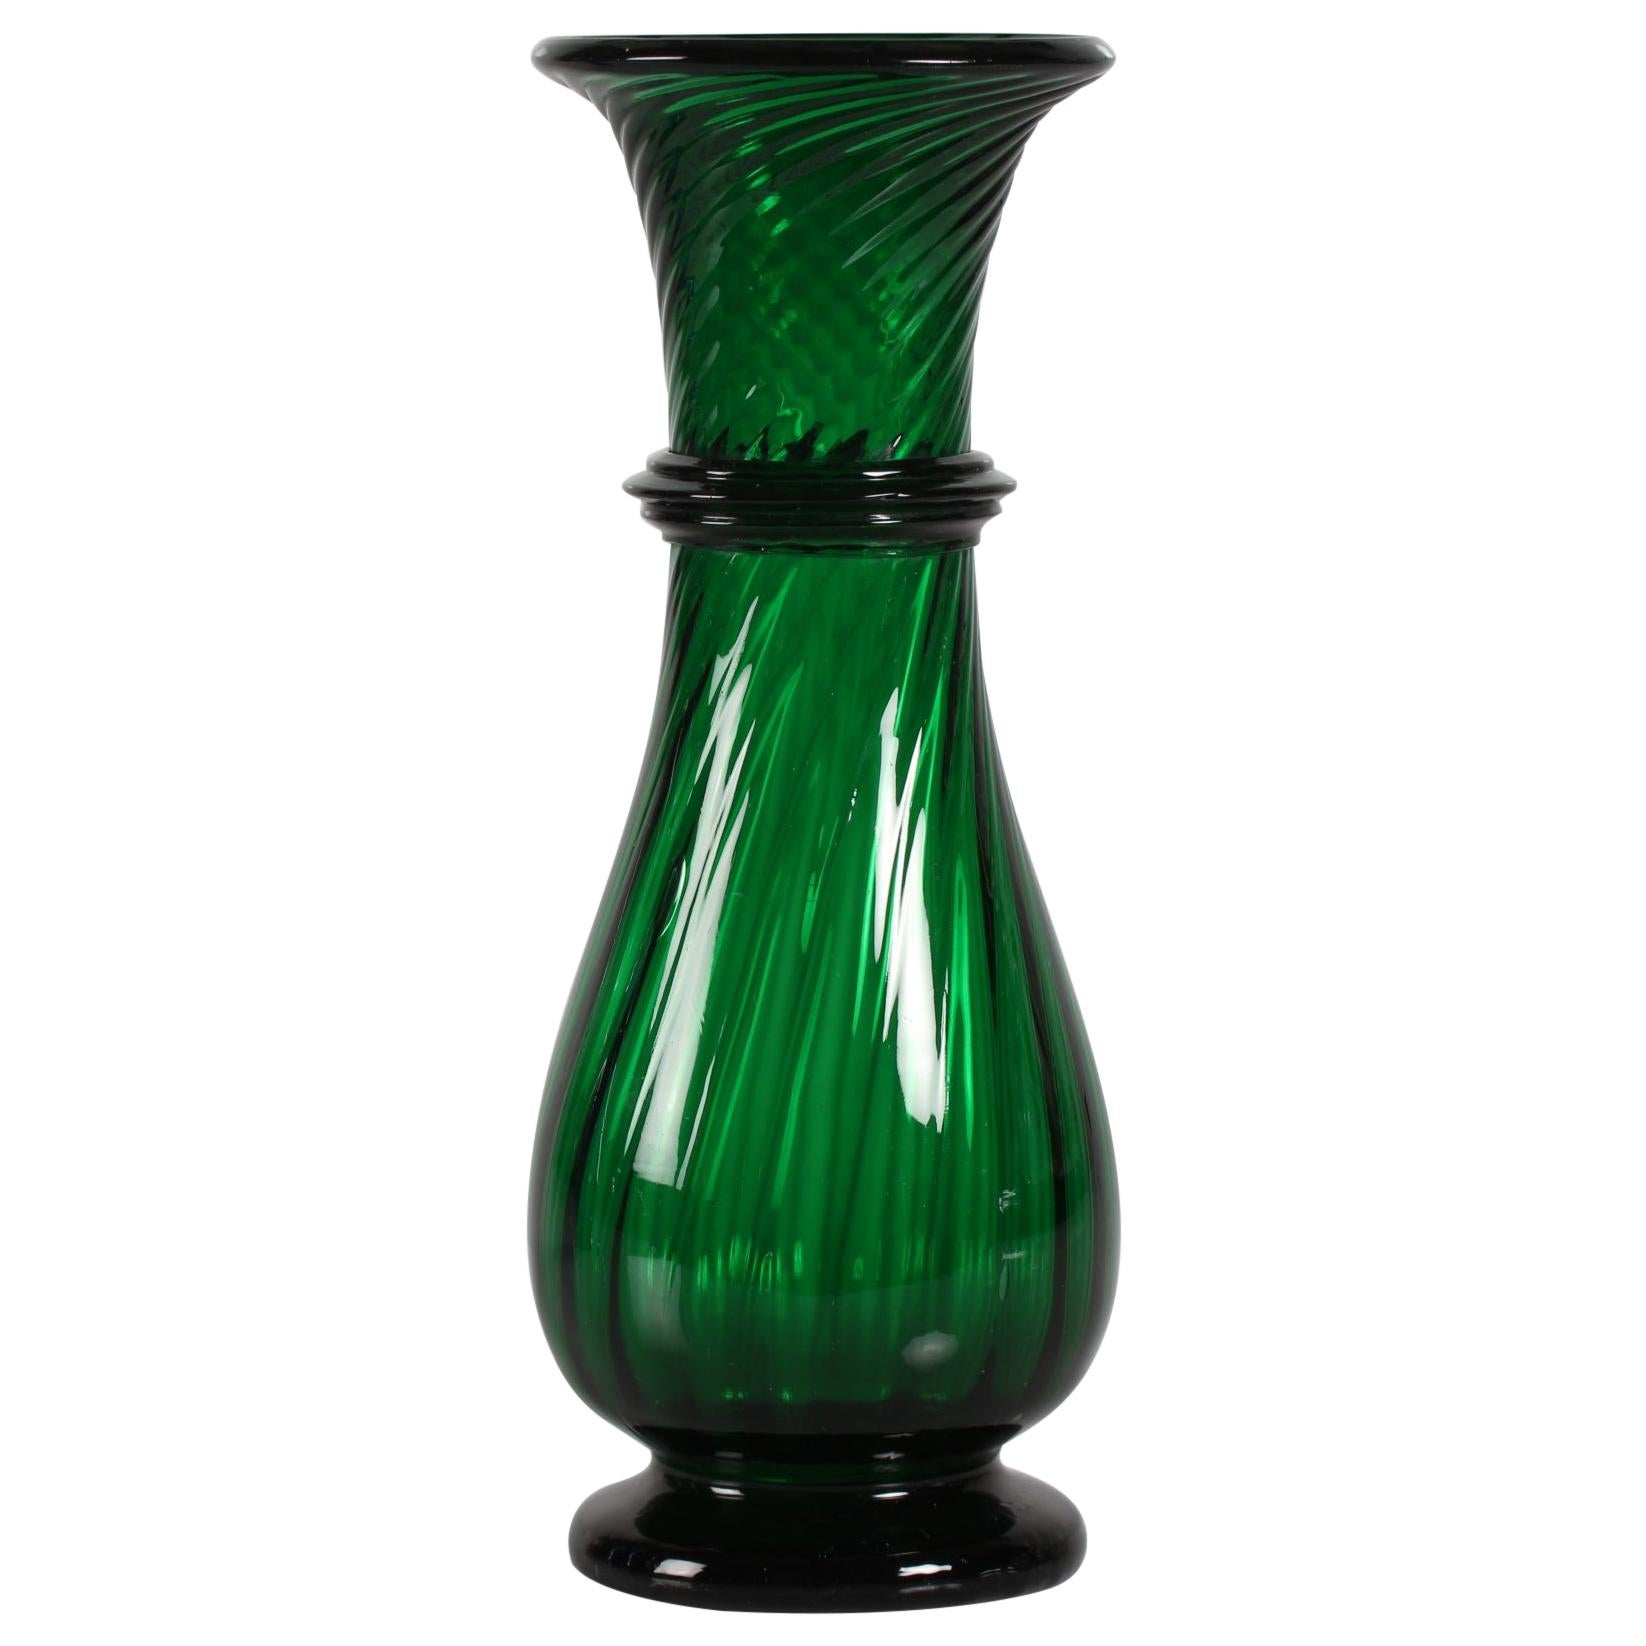 Holmegaard Kastrup Old Danish Green Hyacinth Glass Vase, Mouth Blown, circa 1900